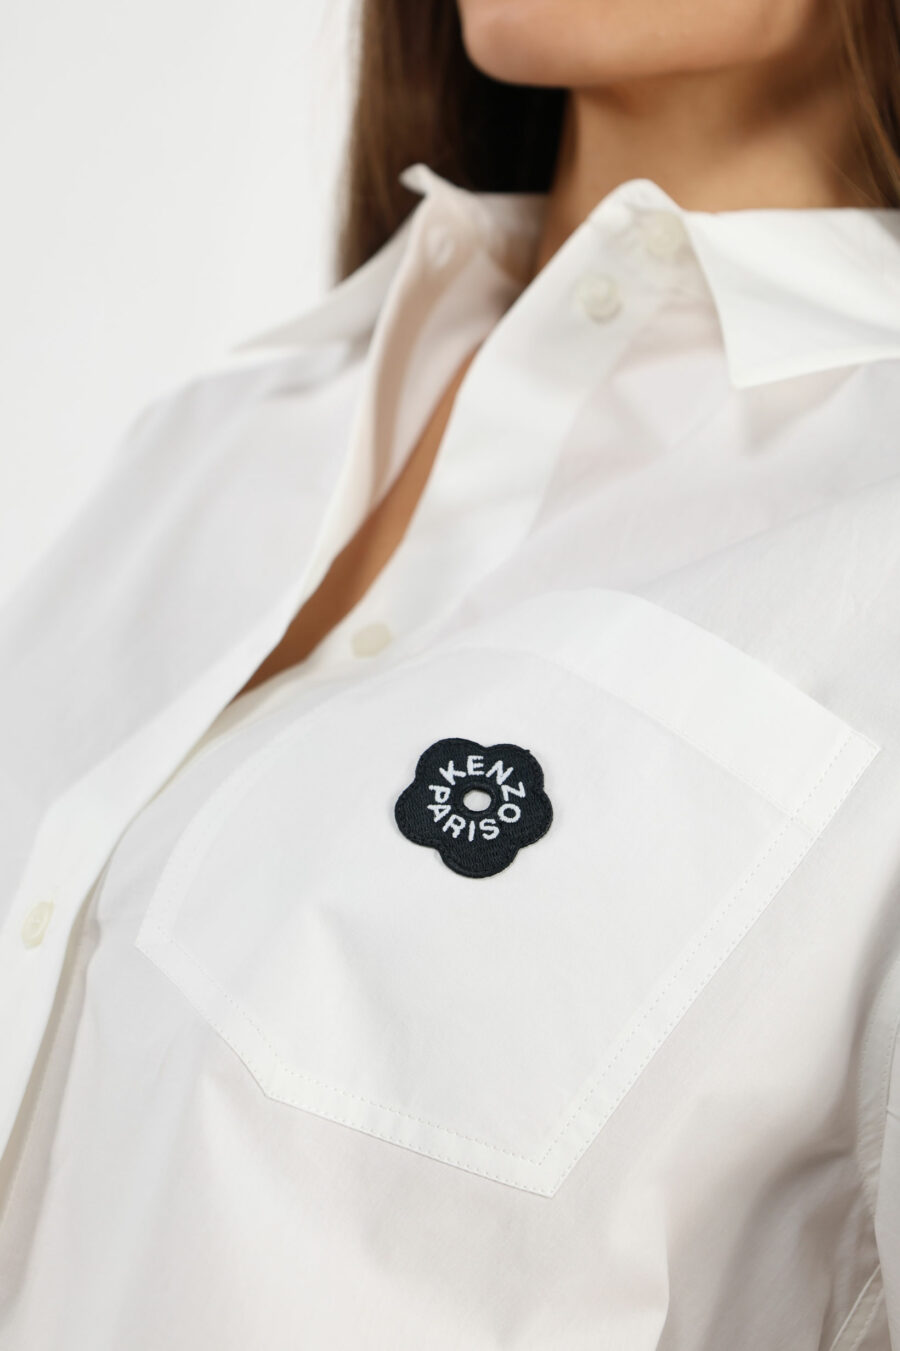 Camisa blanca manga corta con minilogo "boke flower" negro - 109577